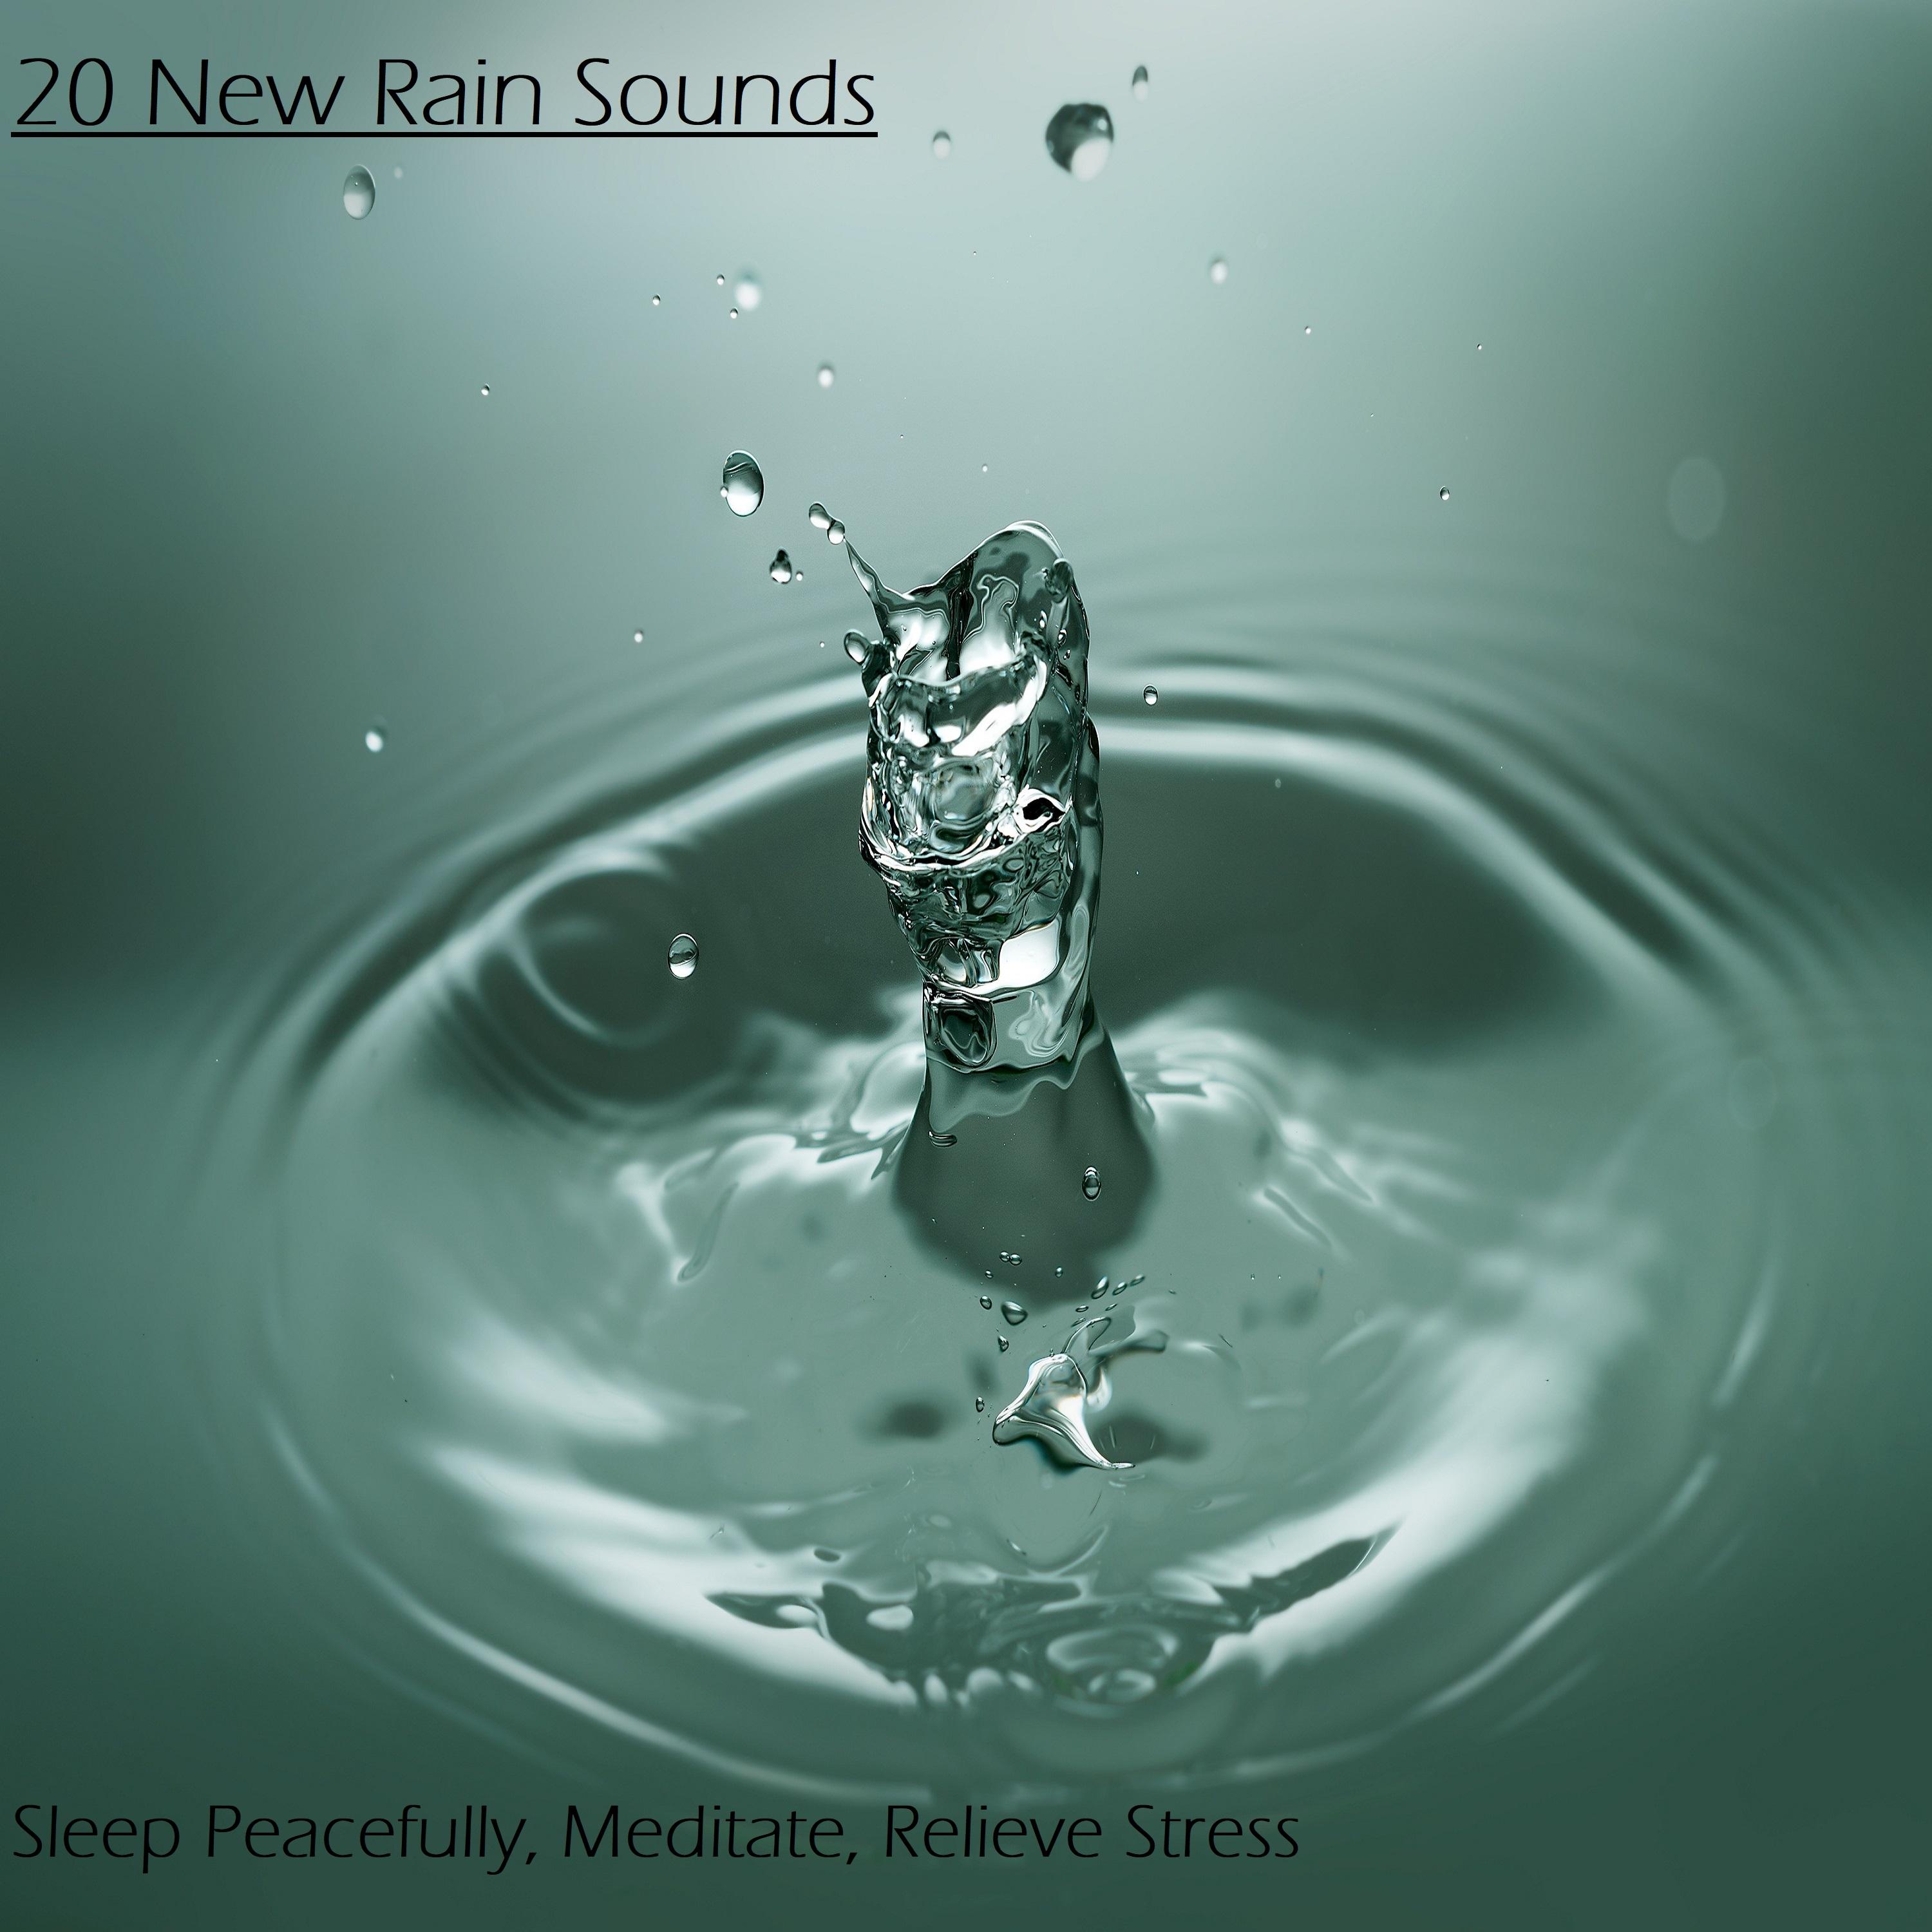 20 New Rain Sounds - Sleep Peacefully, Meditate, Relieve Stress